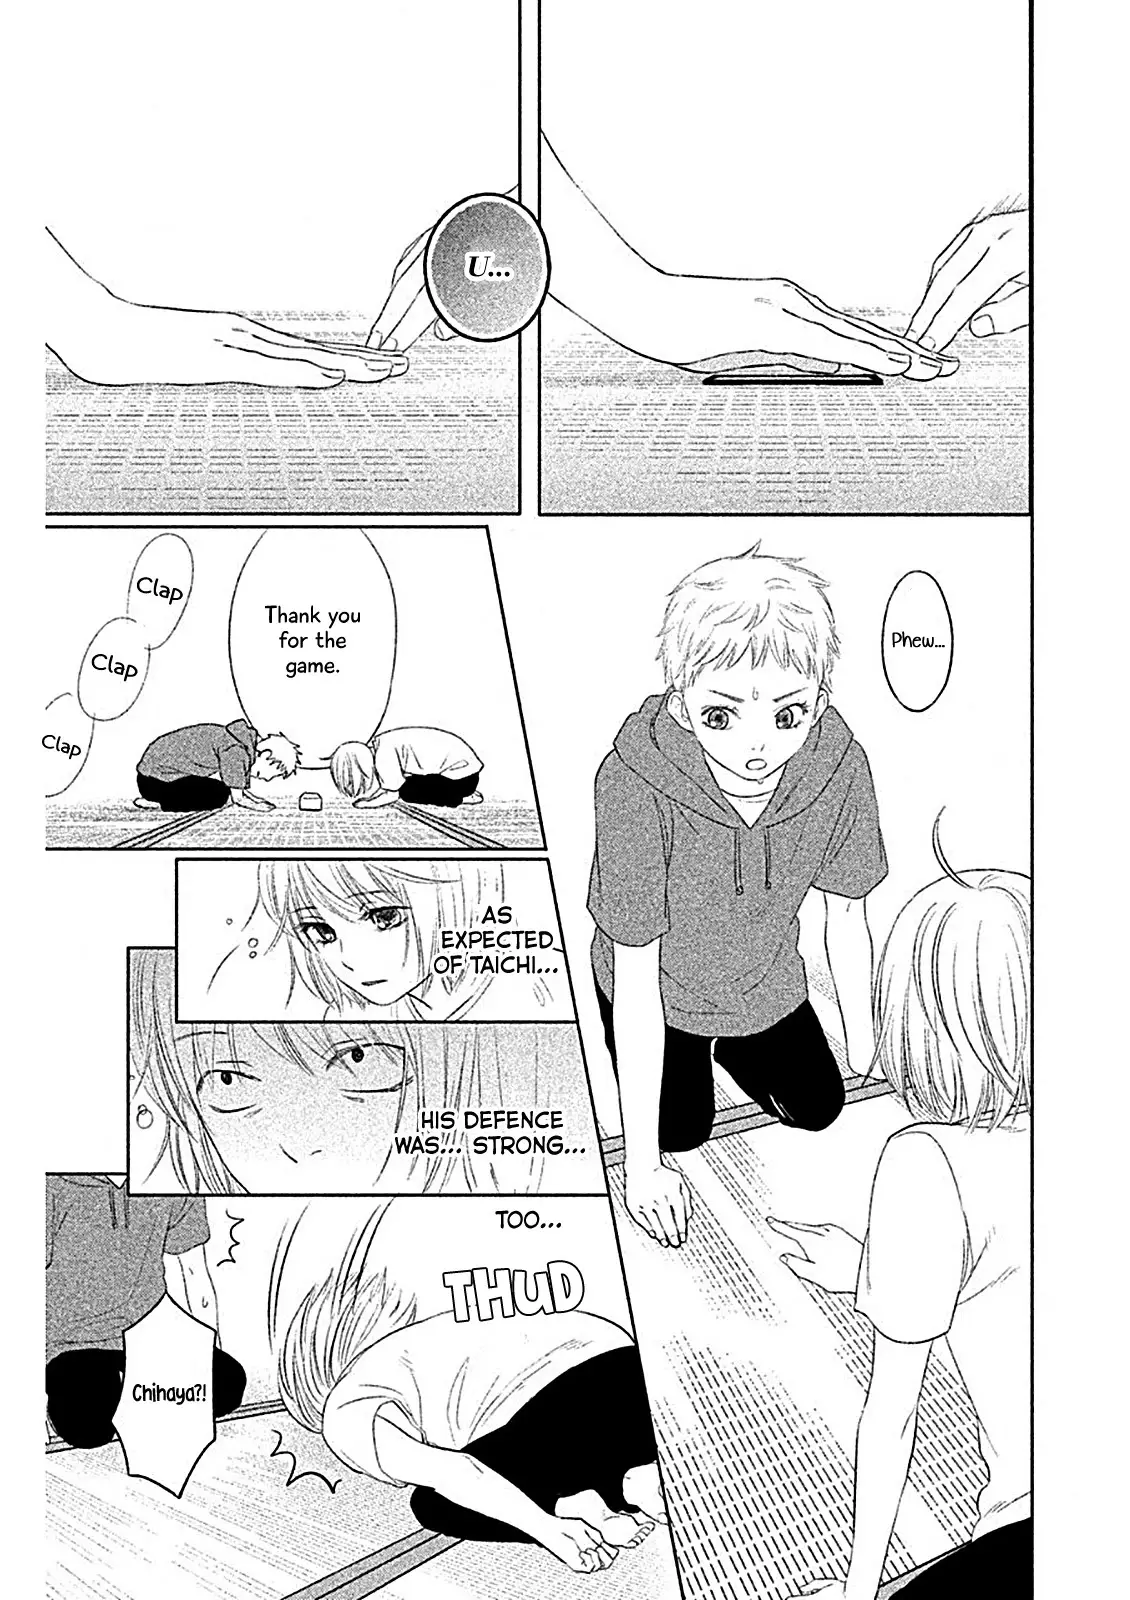 Chihayafuru: Middle School Arc - 1 page 28